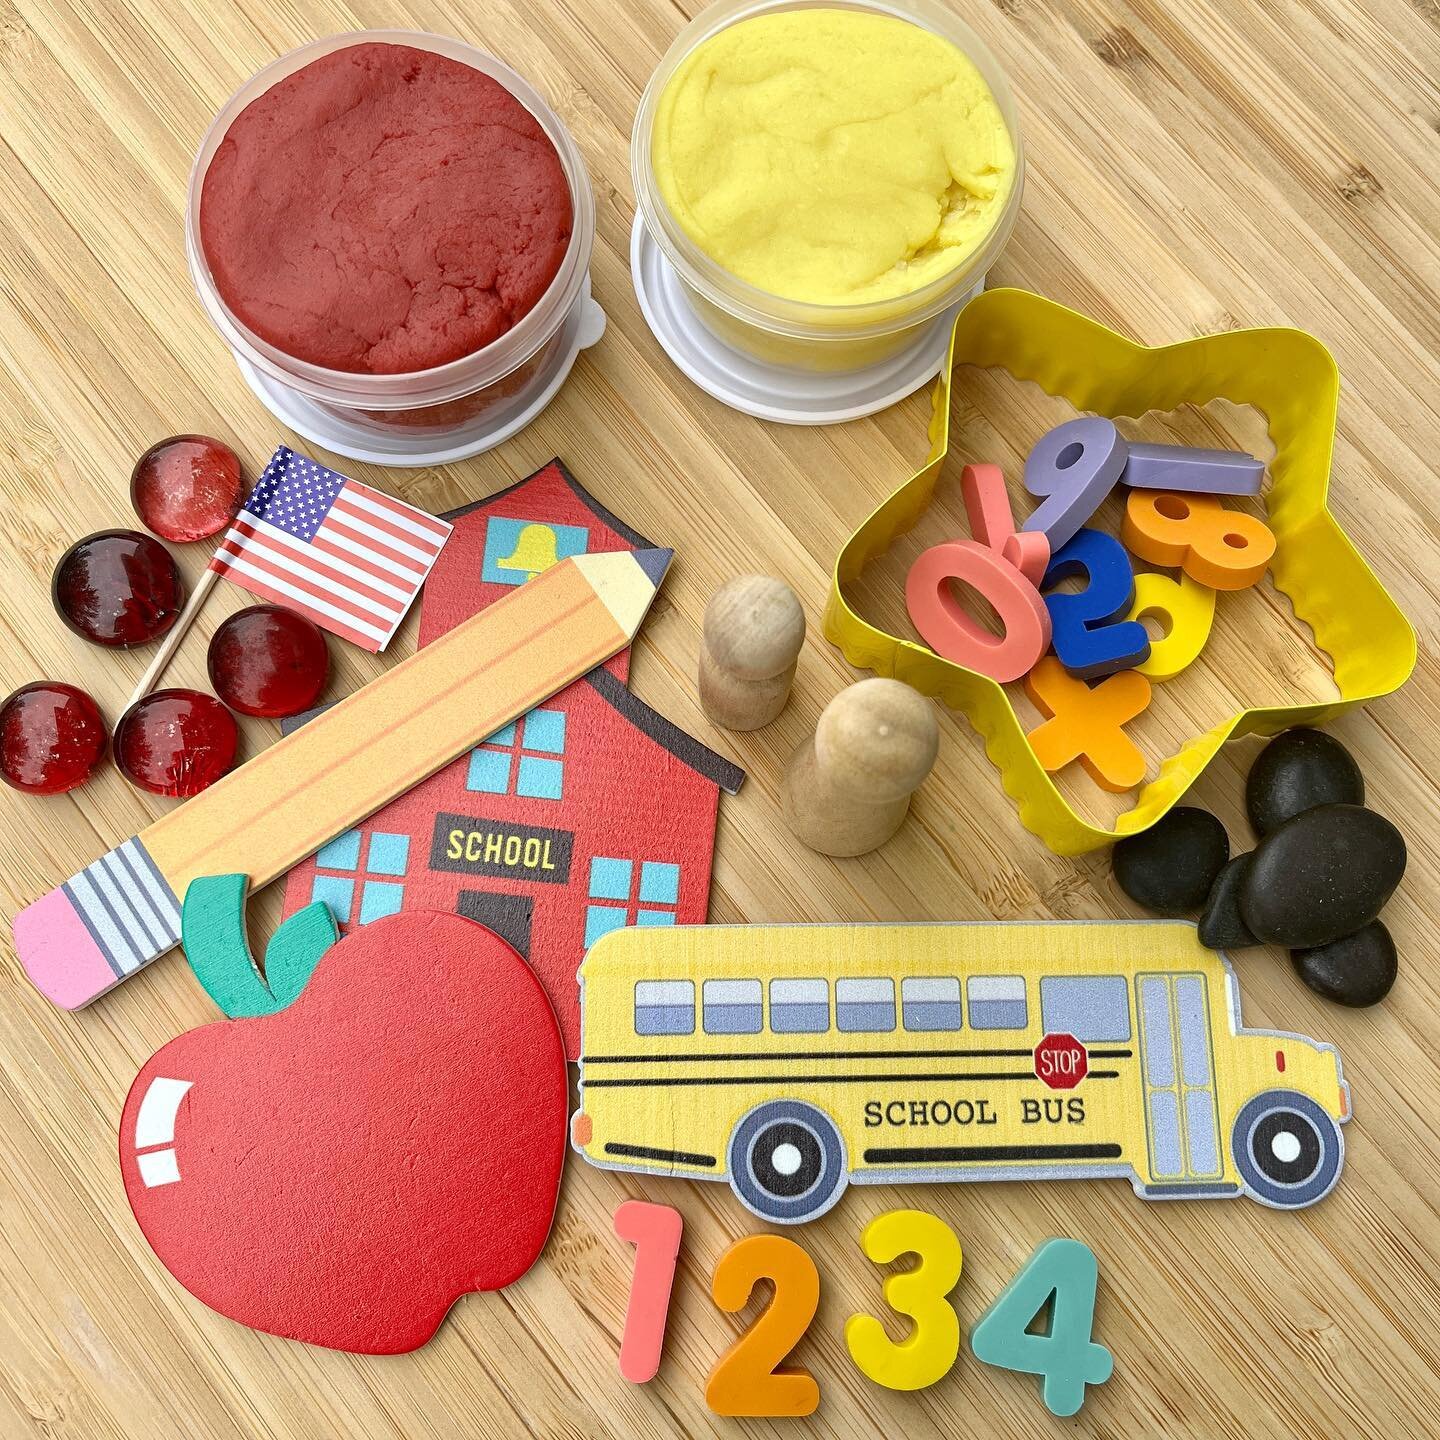 🍎BACK TO SCHOOL🍎

This fun school themed kit is great for back to school play.
Lemonade and black cherry playdough makes this kit extra fun! 

https://www.leikasensorycreations.com/shop-kits/p/rc2f665txafxkz3-2tr3f-pdr9r-klgzn-3eh88-64edy-brahd

#l